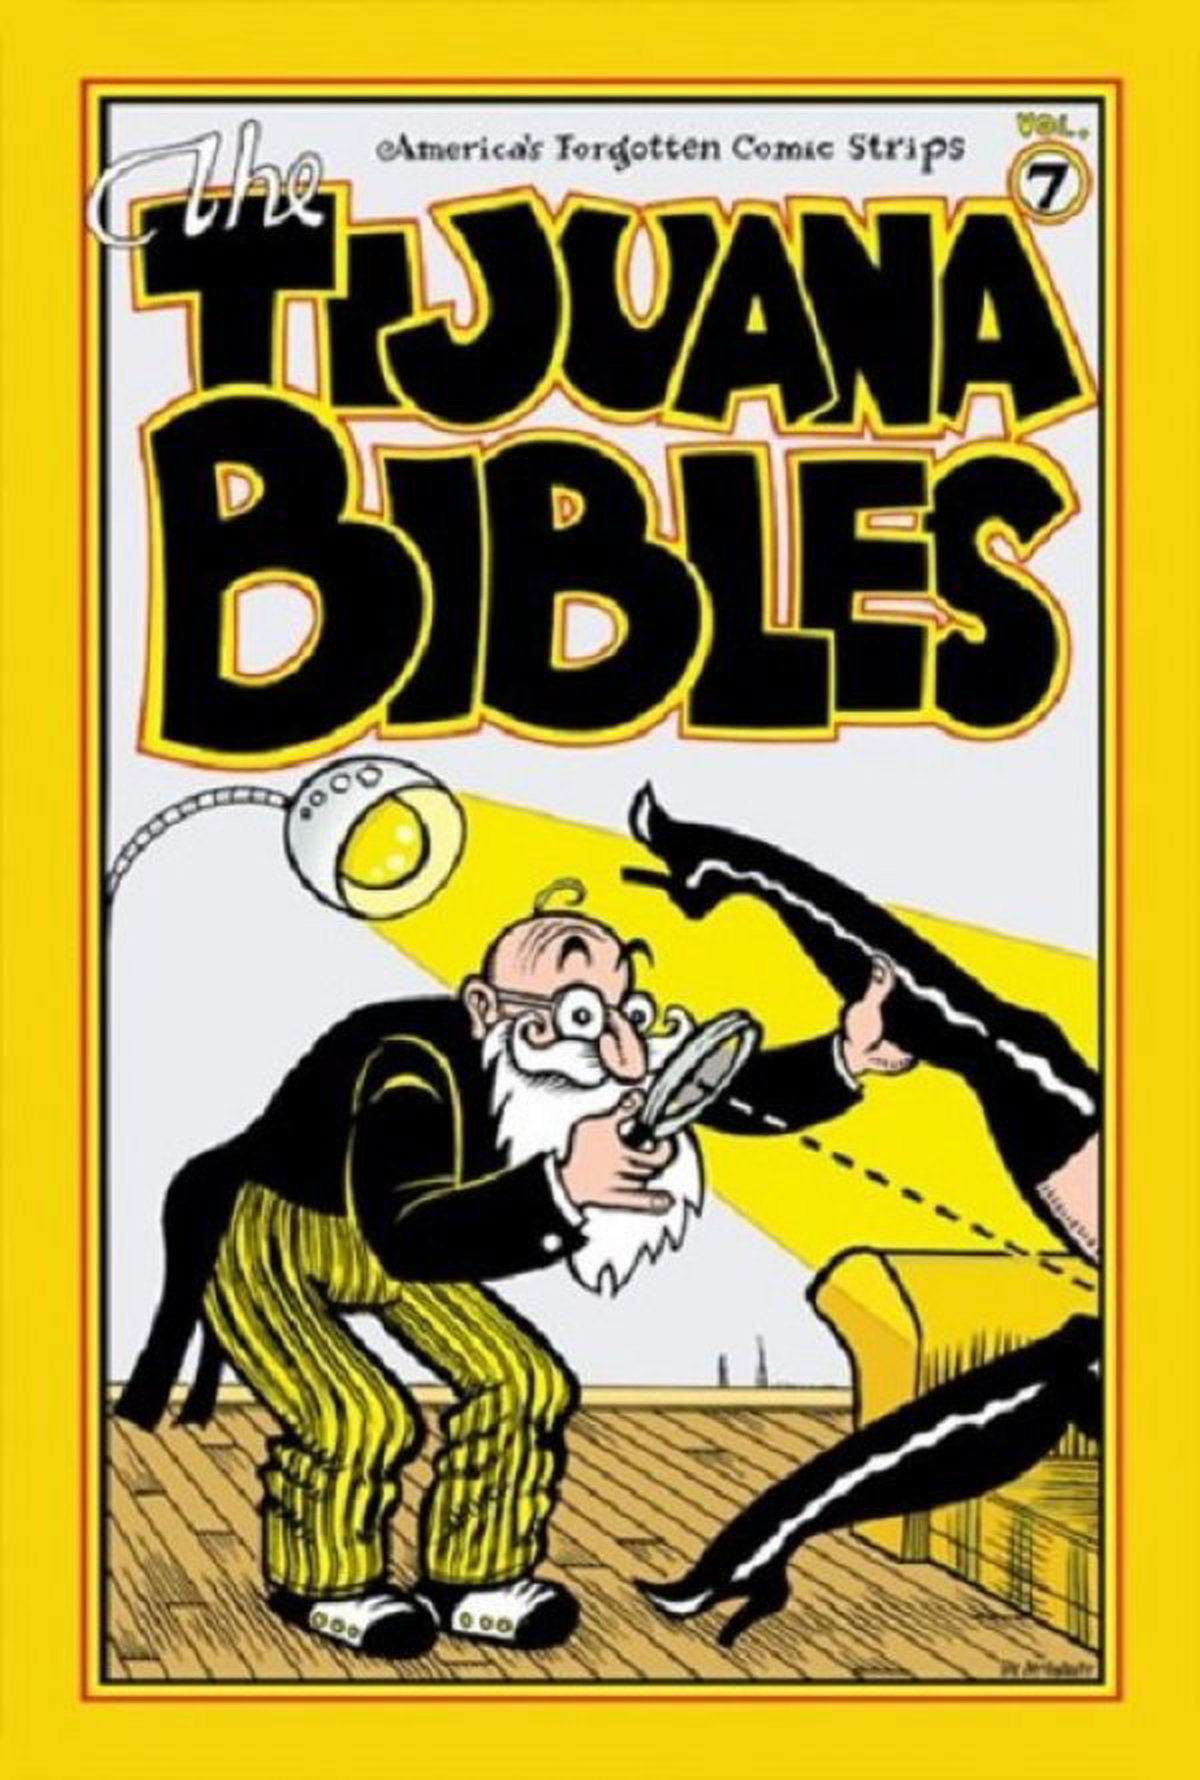 The Tijuana Bibles: America's Forgotten Comic Strips #7